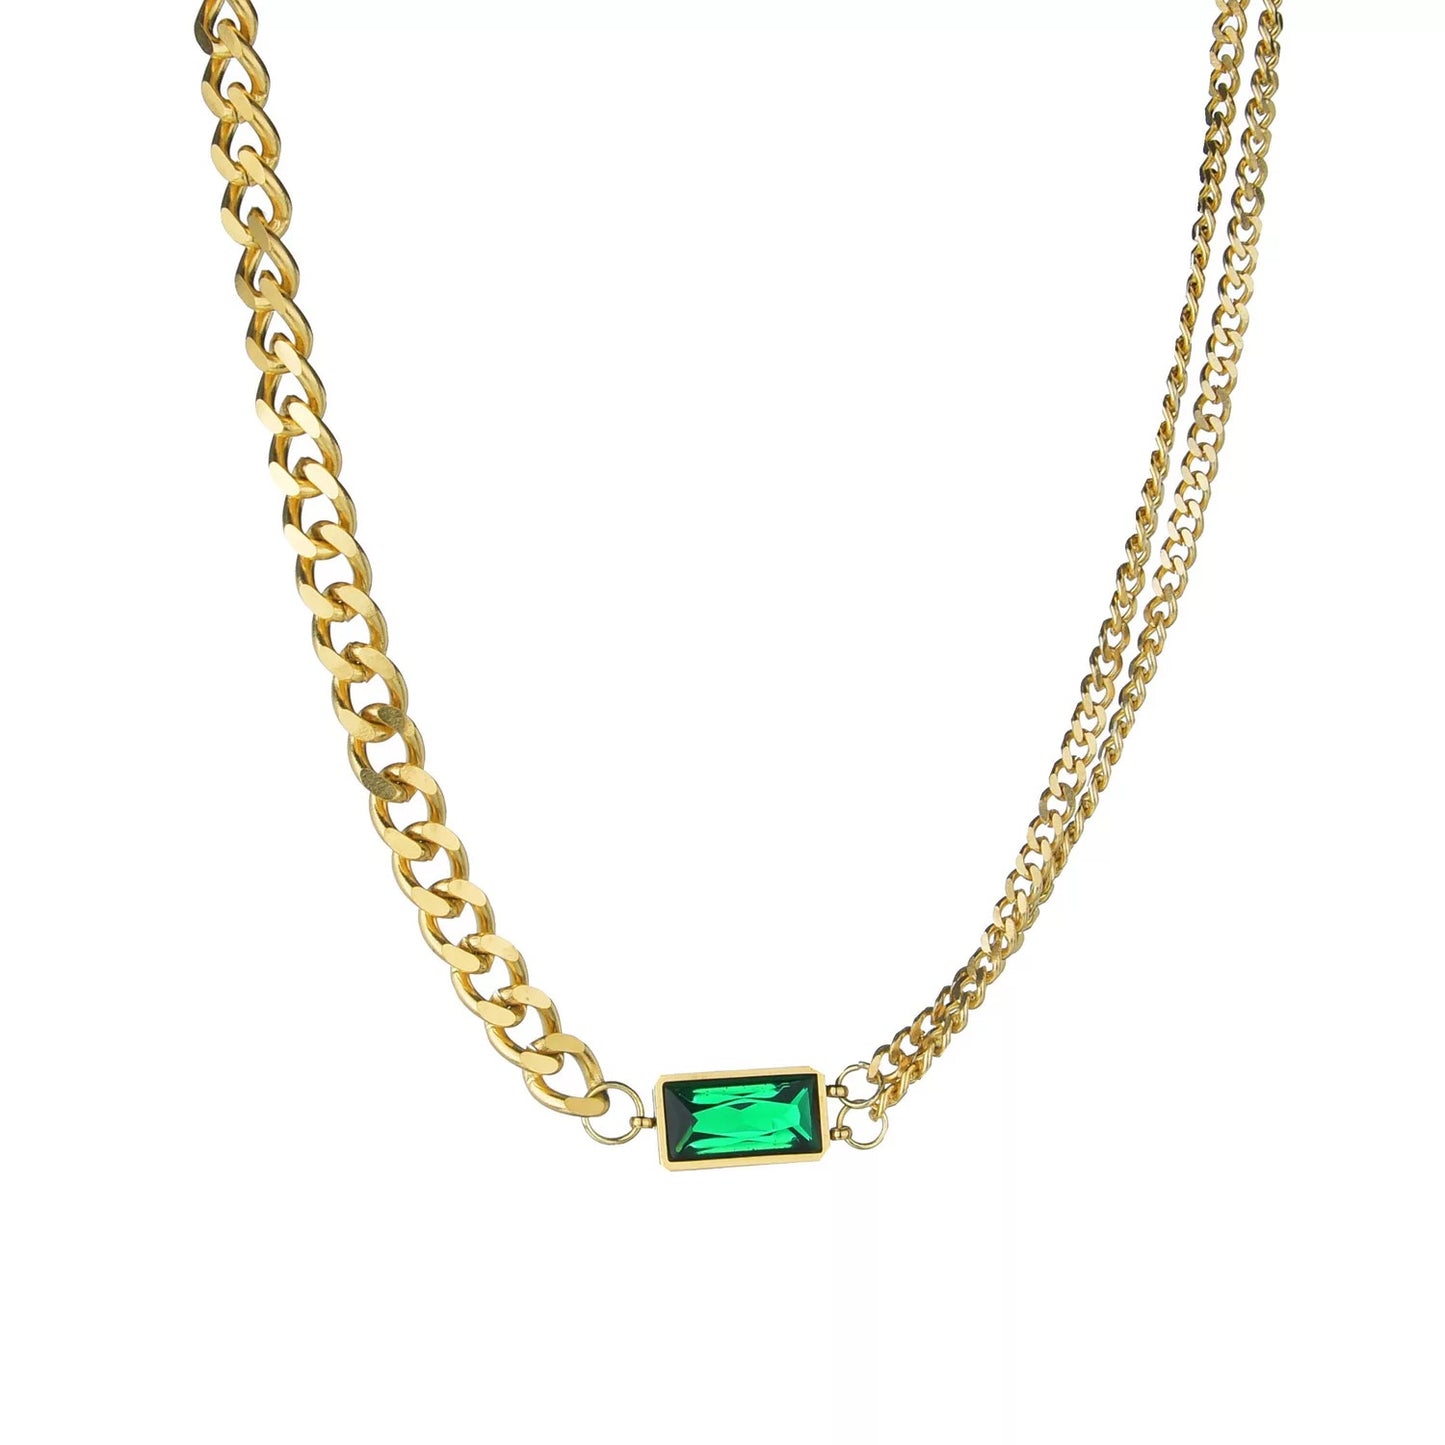 The RiRi Emerald Chain